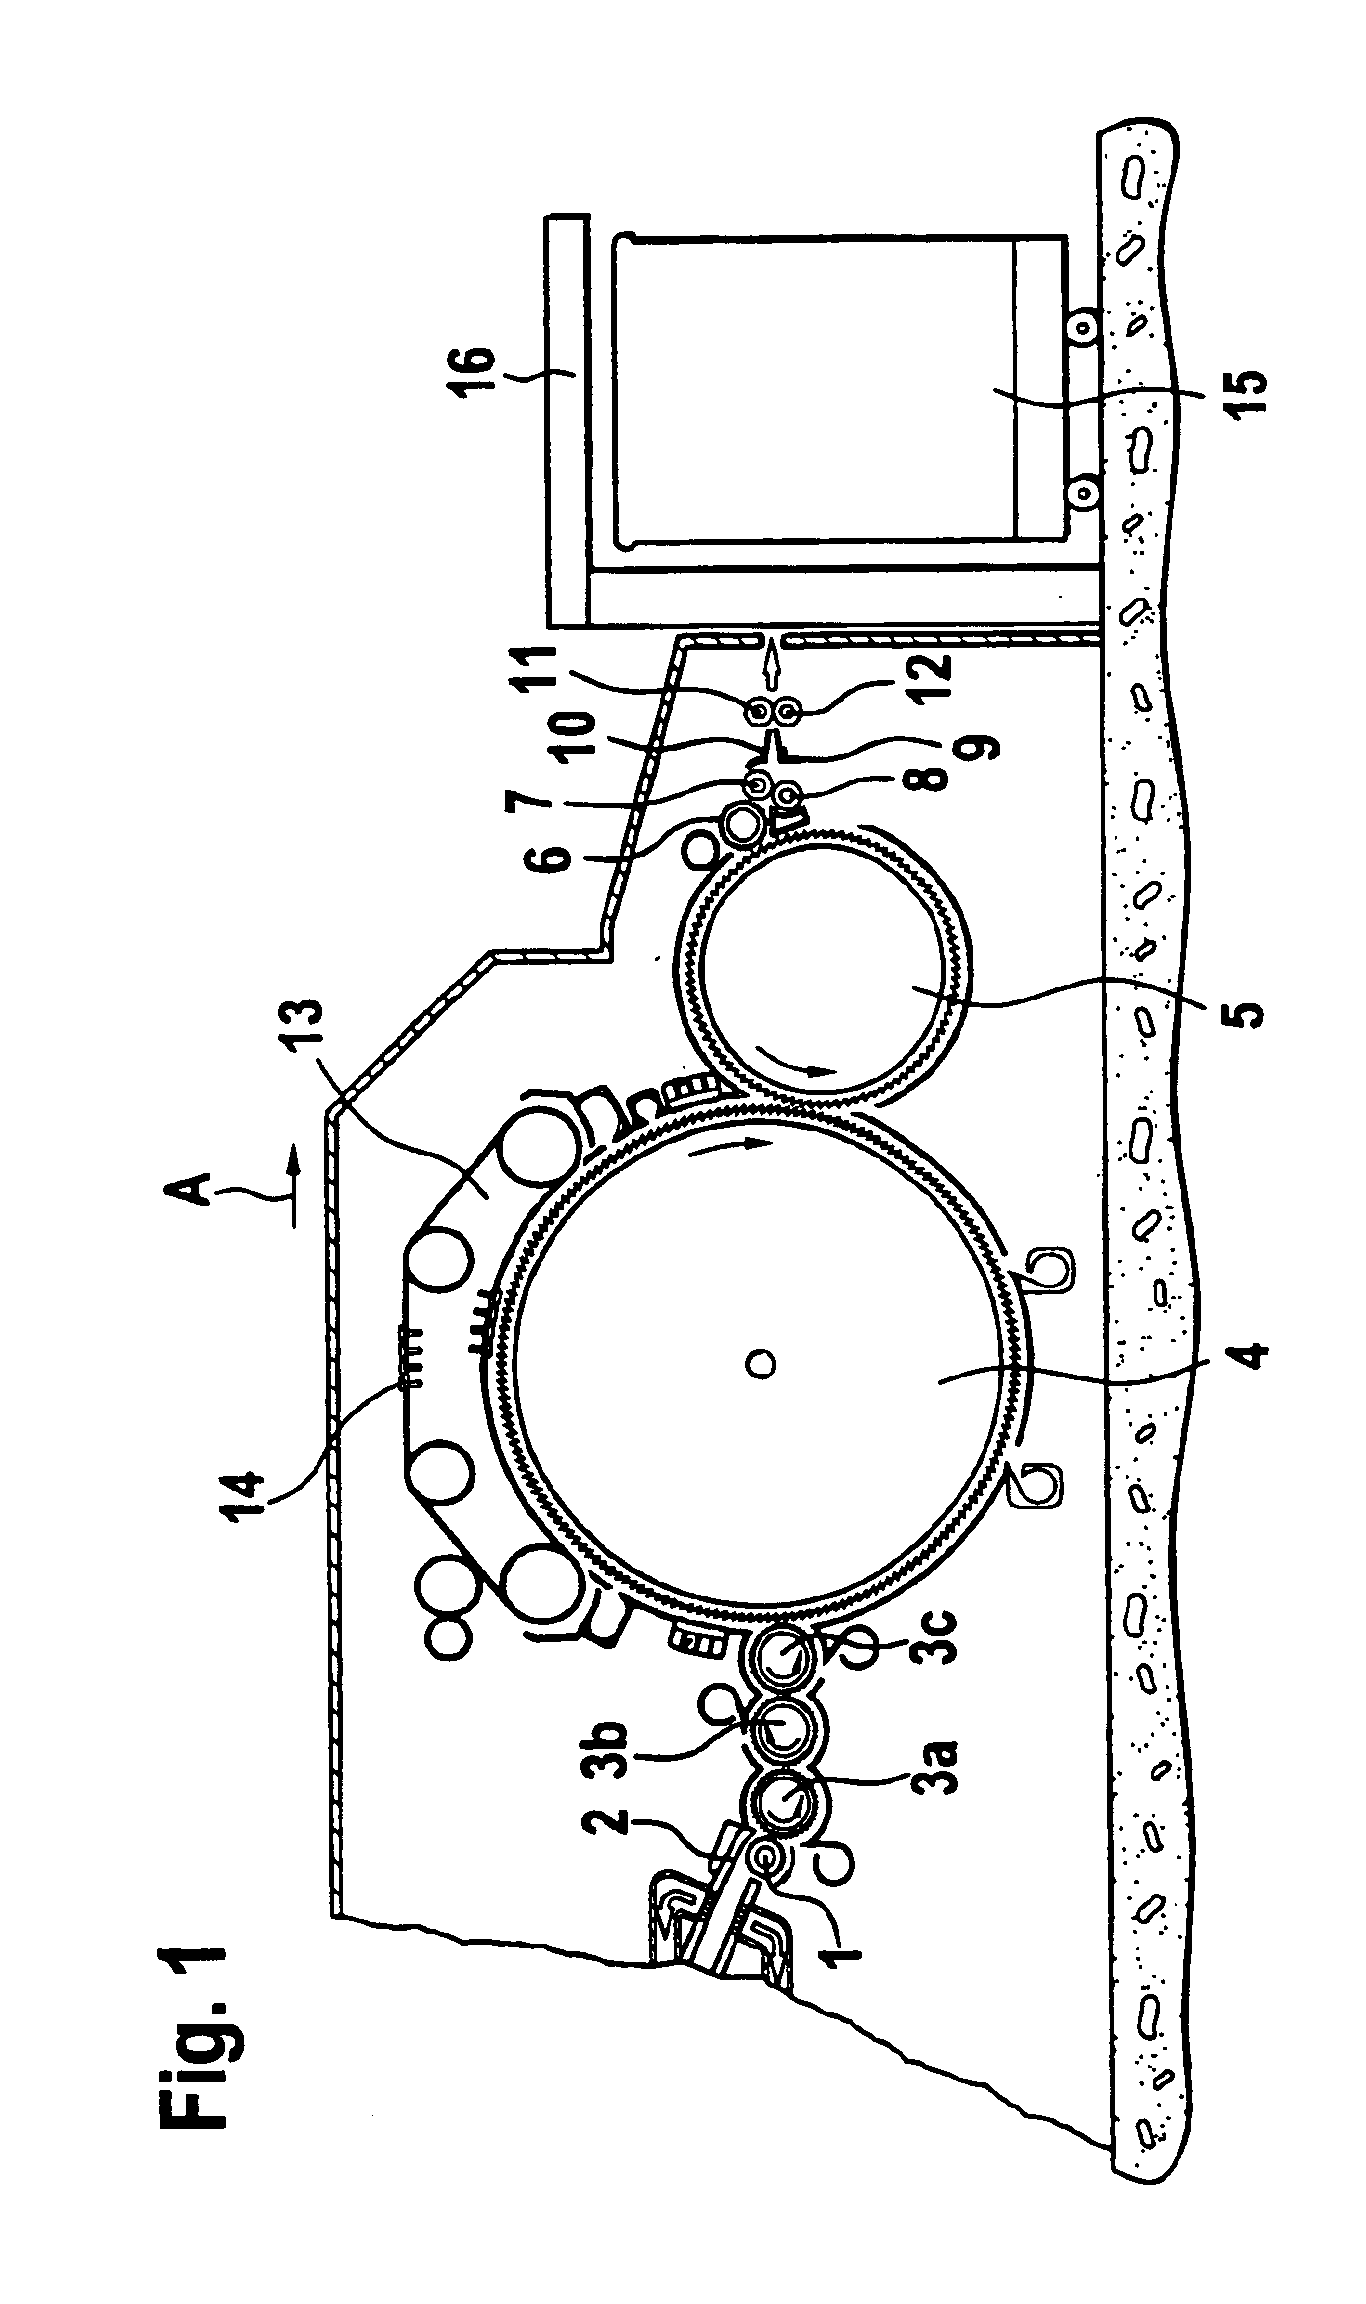 Cylinder for spinning preparation machine